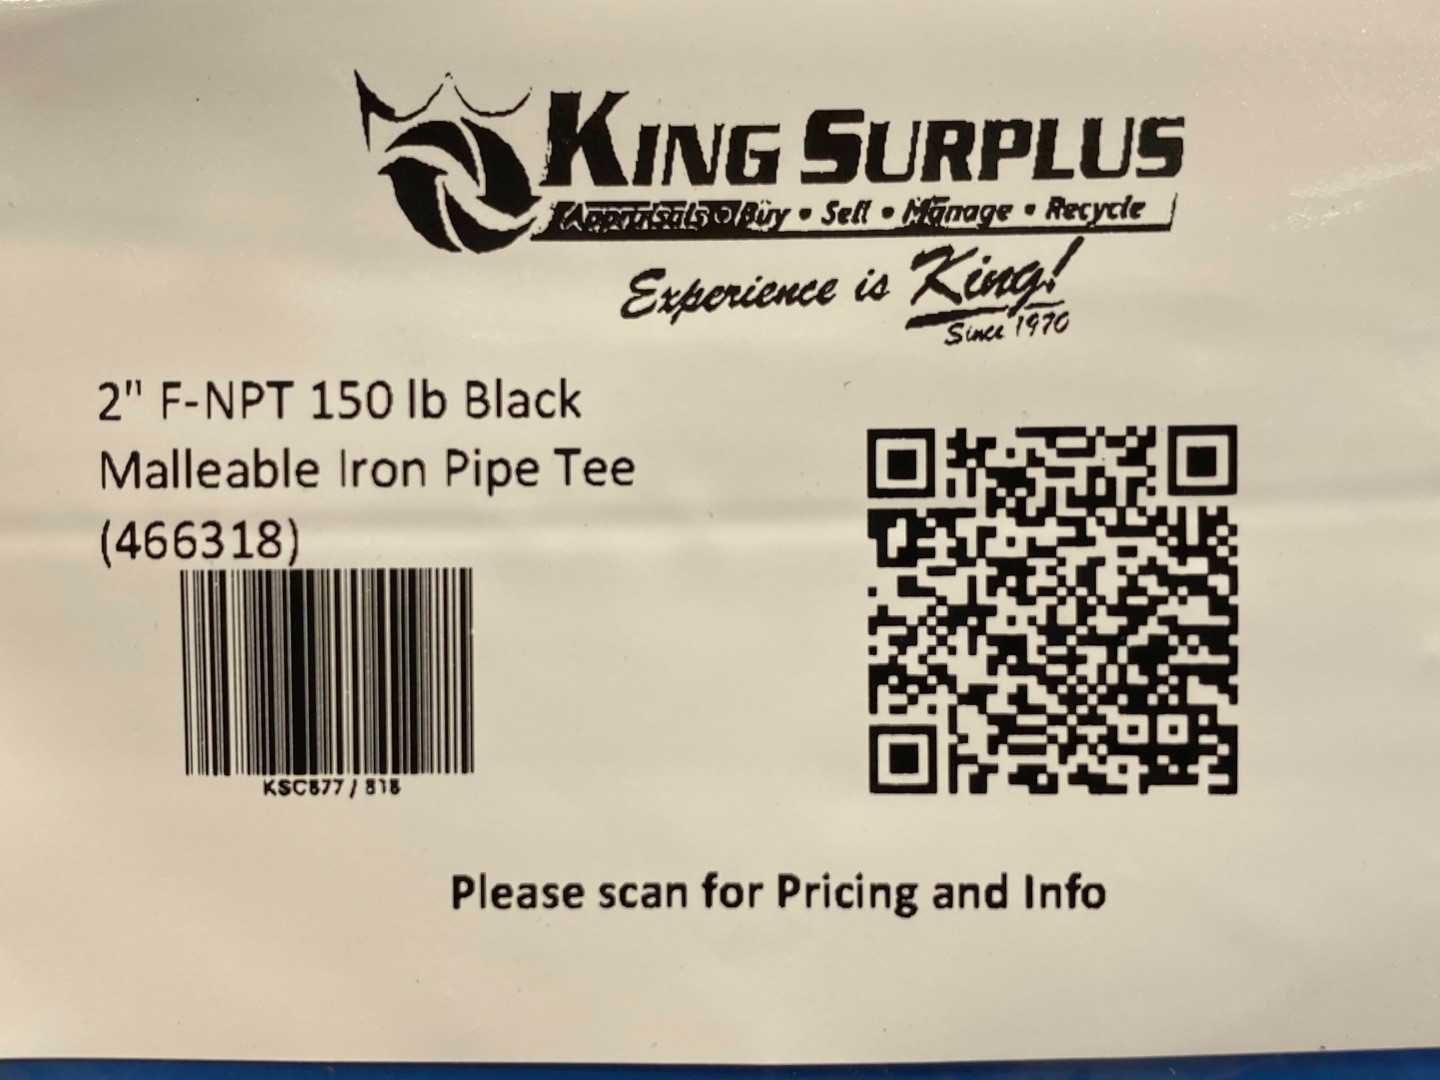 2" F-NPT 150 lb Black Malleable Iron Pipe Tee (466318)